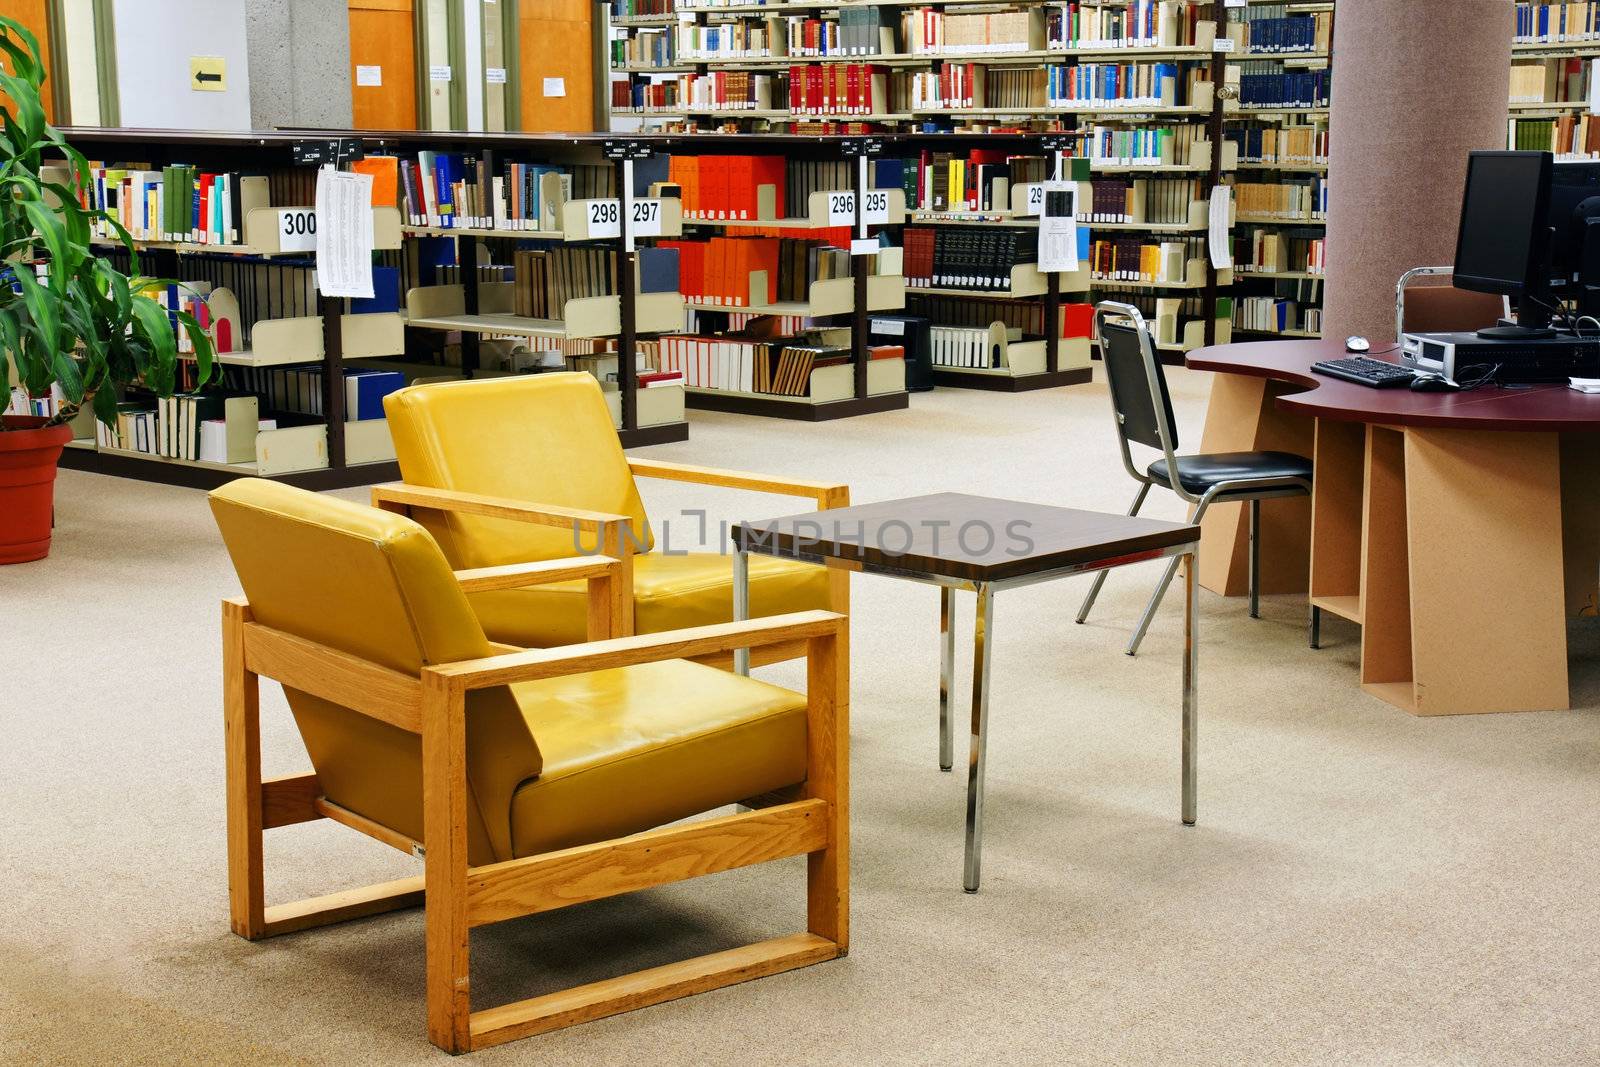 University librairy yellow chairs by Mirage3